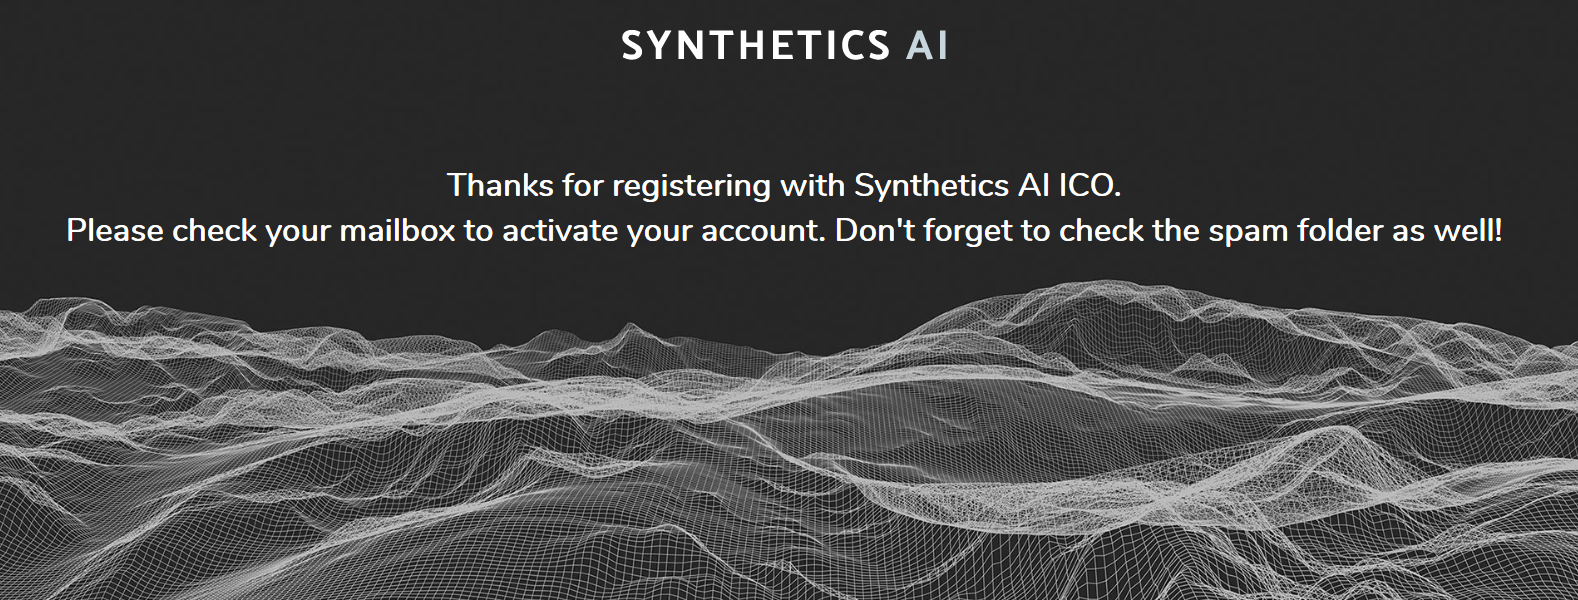 Screenshot-2018-2-28 Synthetics AI(1).png